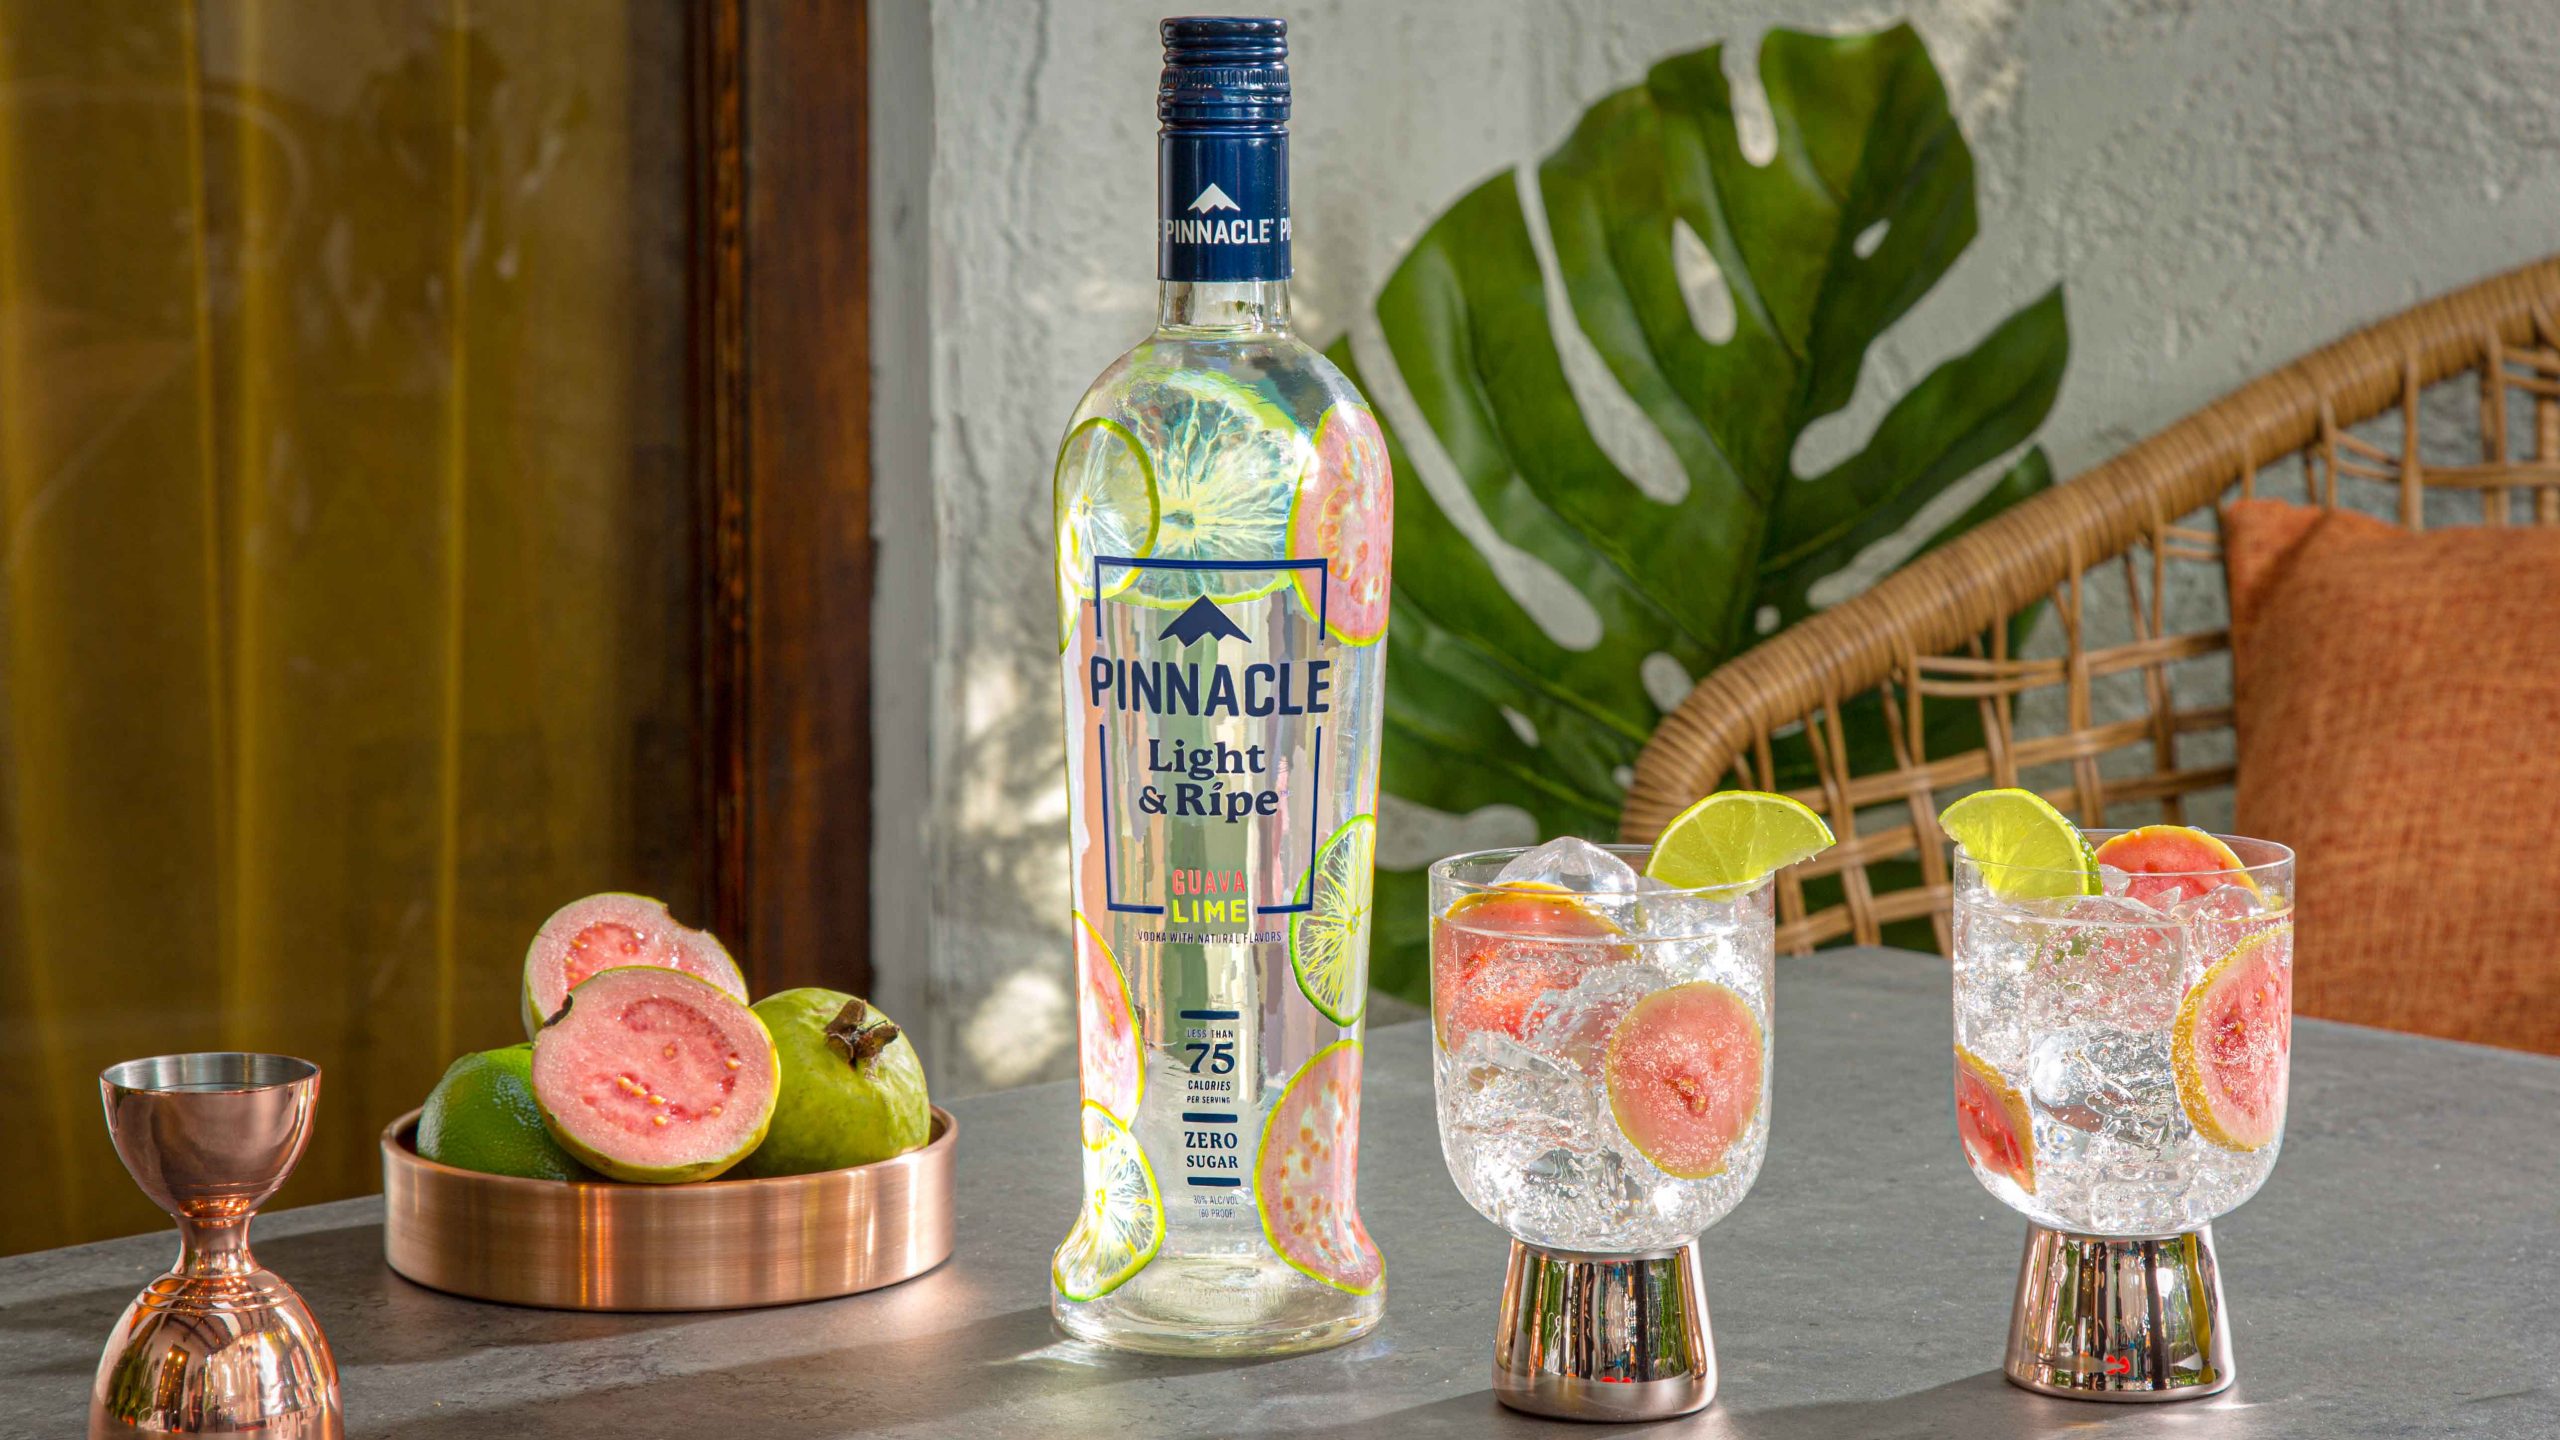 Pinnacle Light & Ripe Guava Lime sparkler